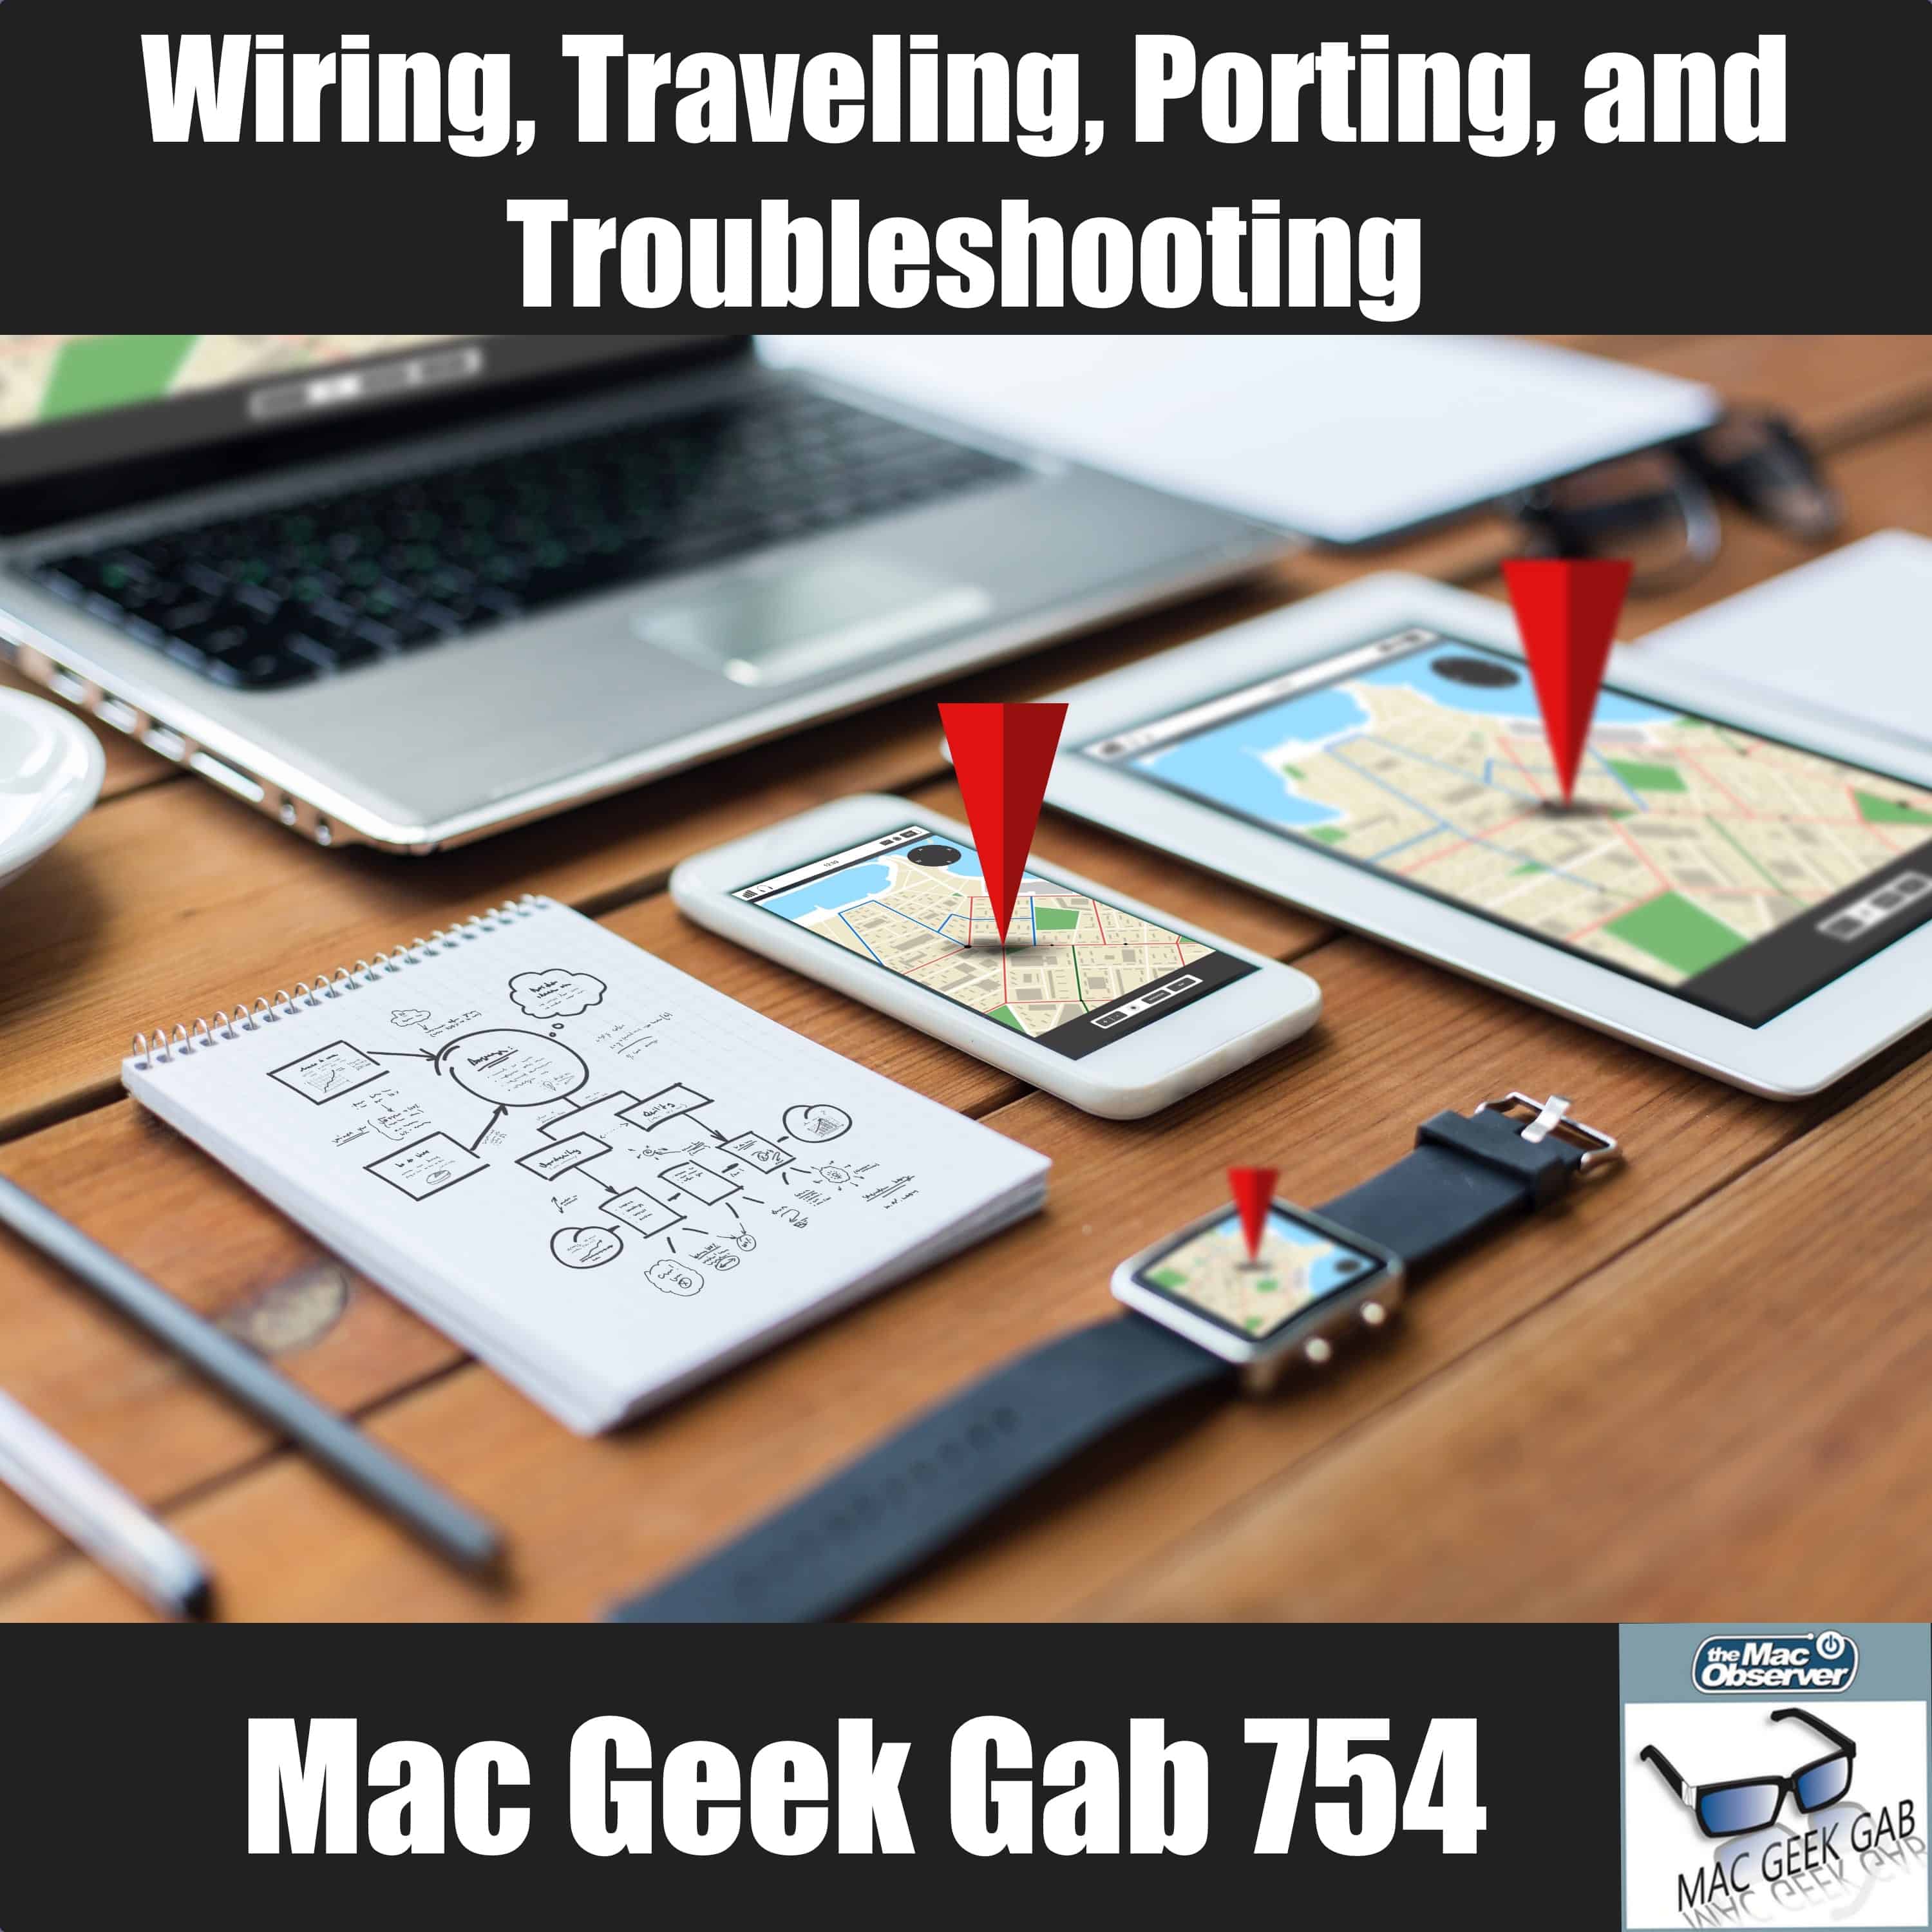 New iMacs, Traveling, Porting, and Troubleshooting – Mac Geek Gab 754